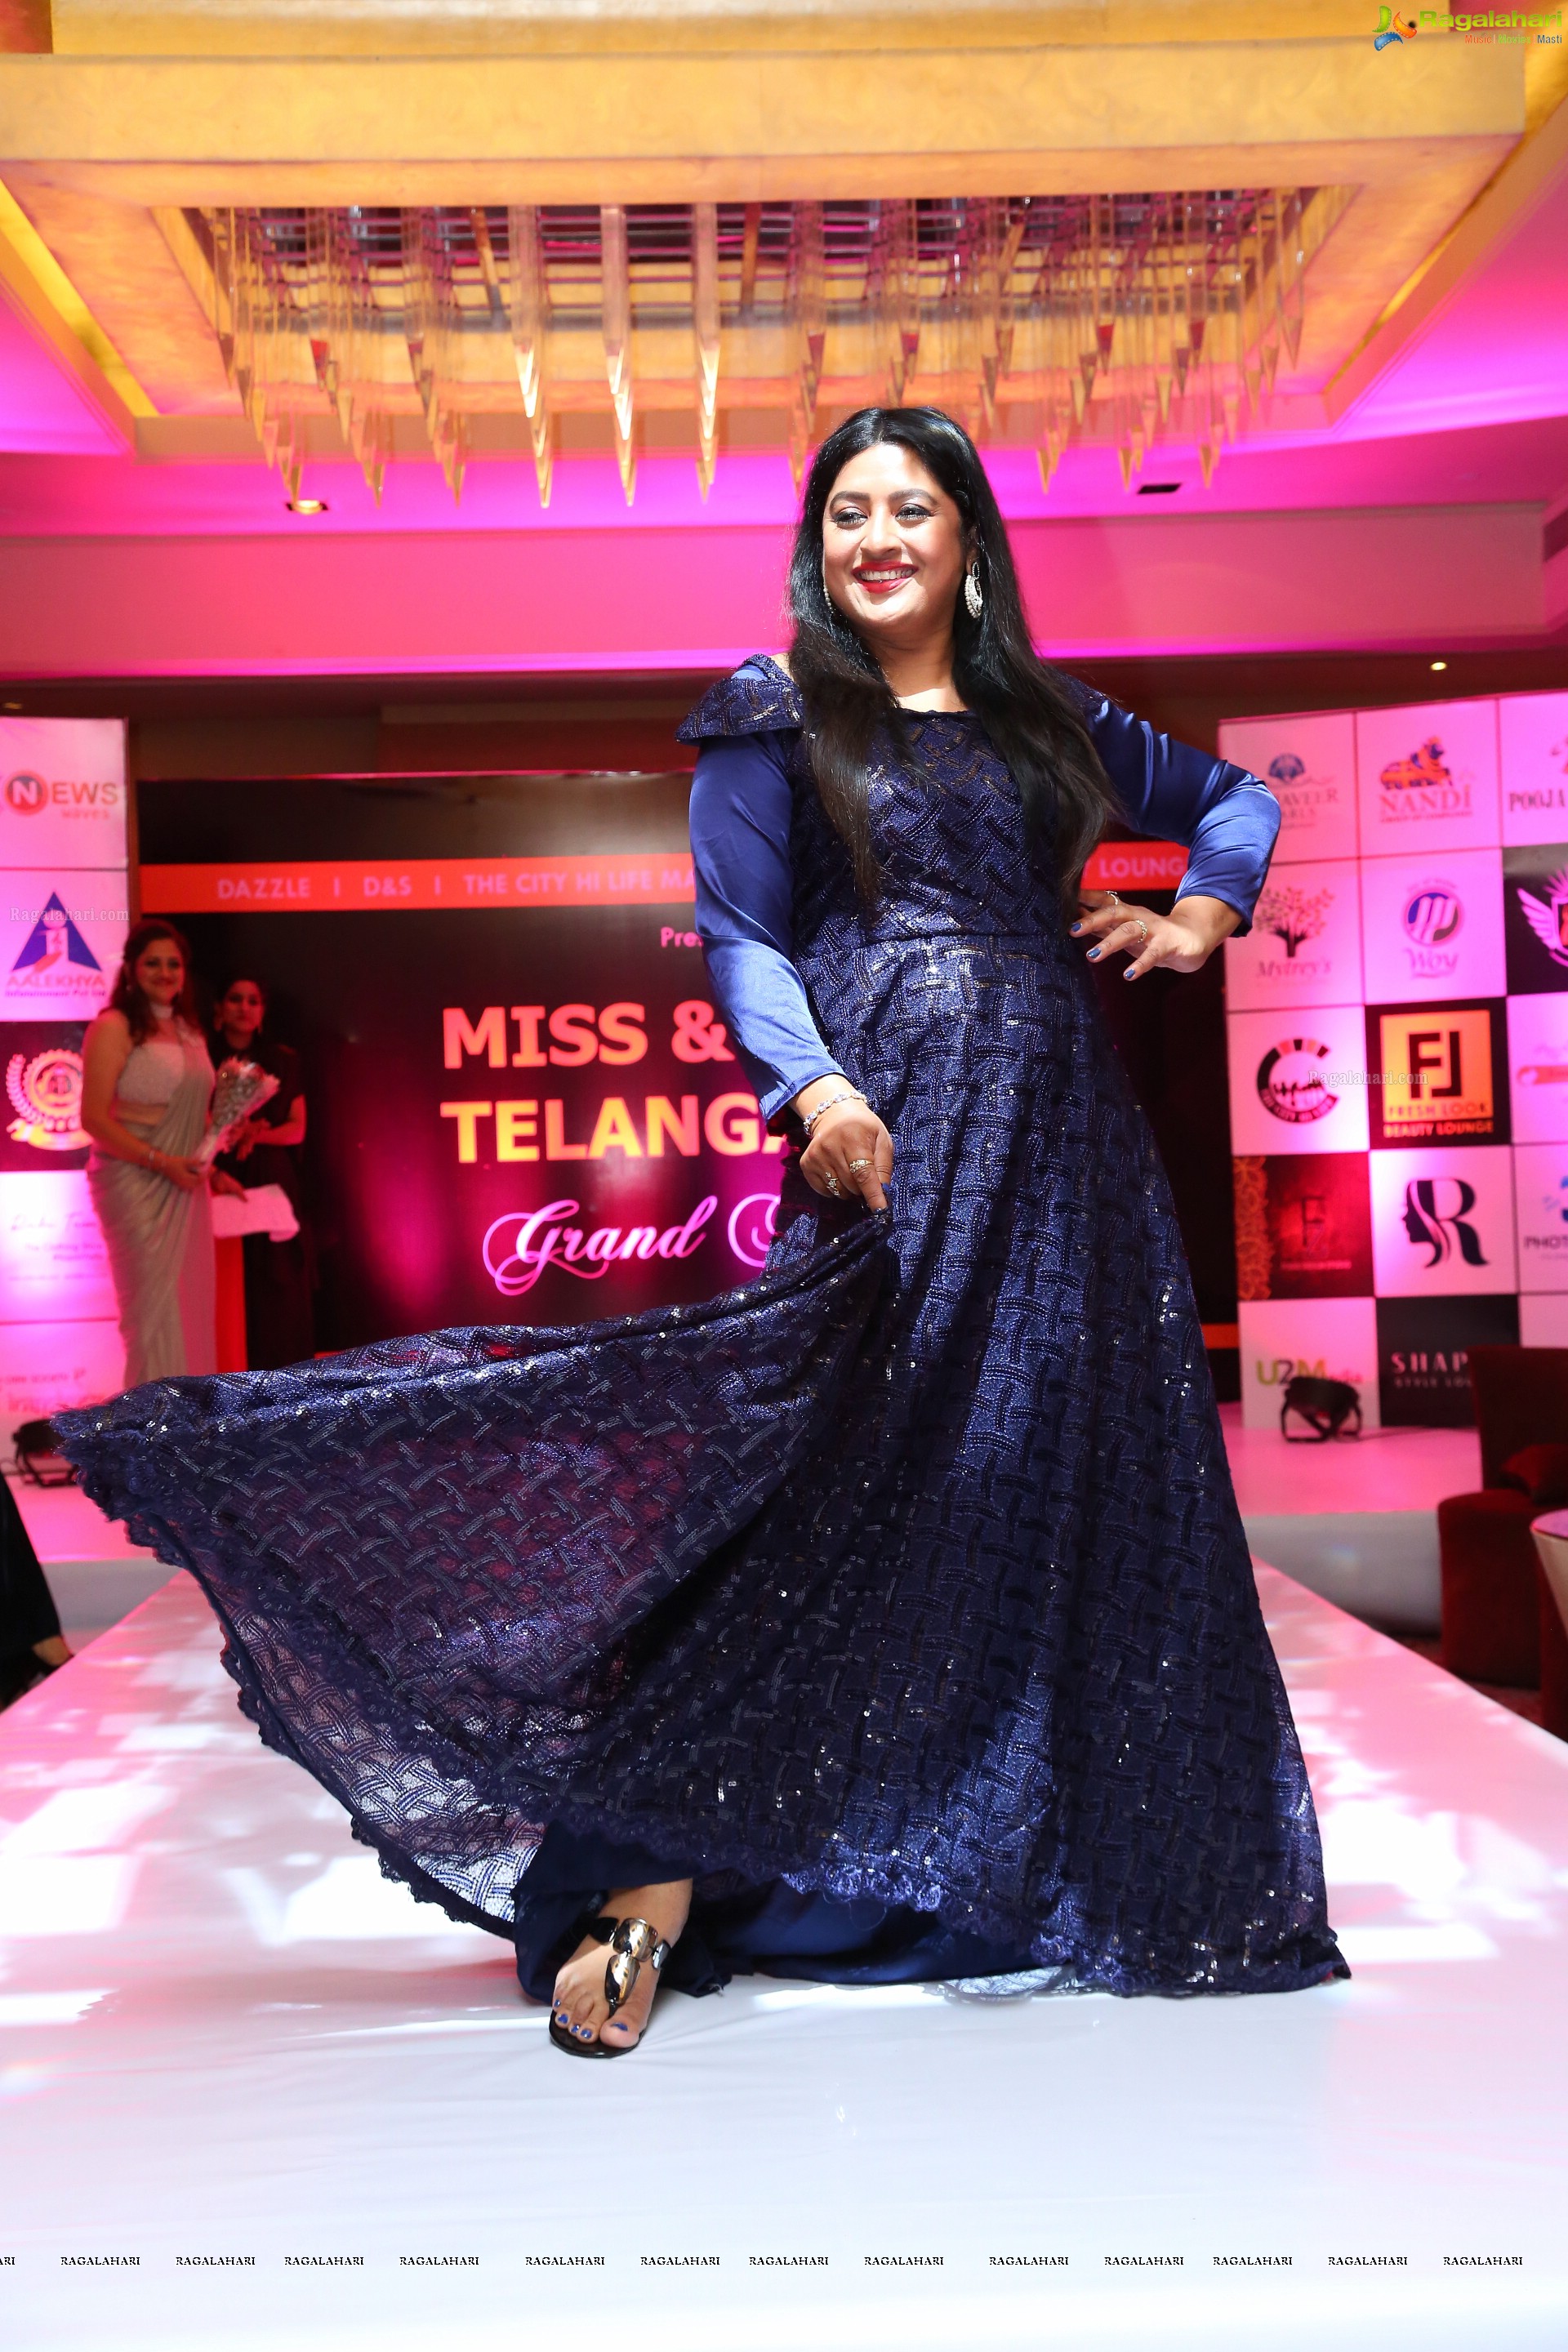 Sana at Miss and Mrs Telangana 2018 (High Definition Photos)